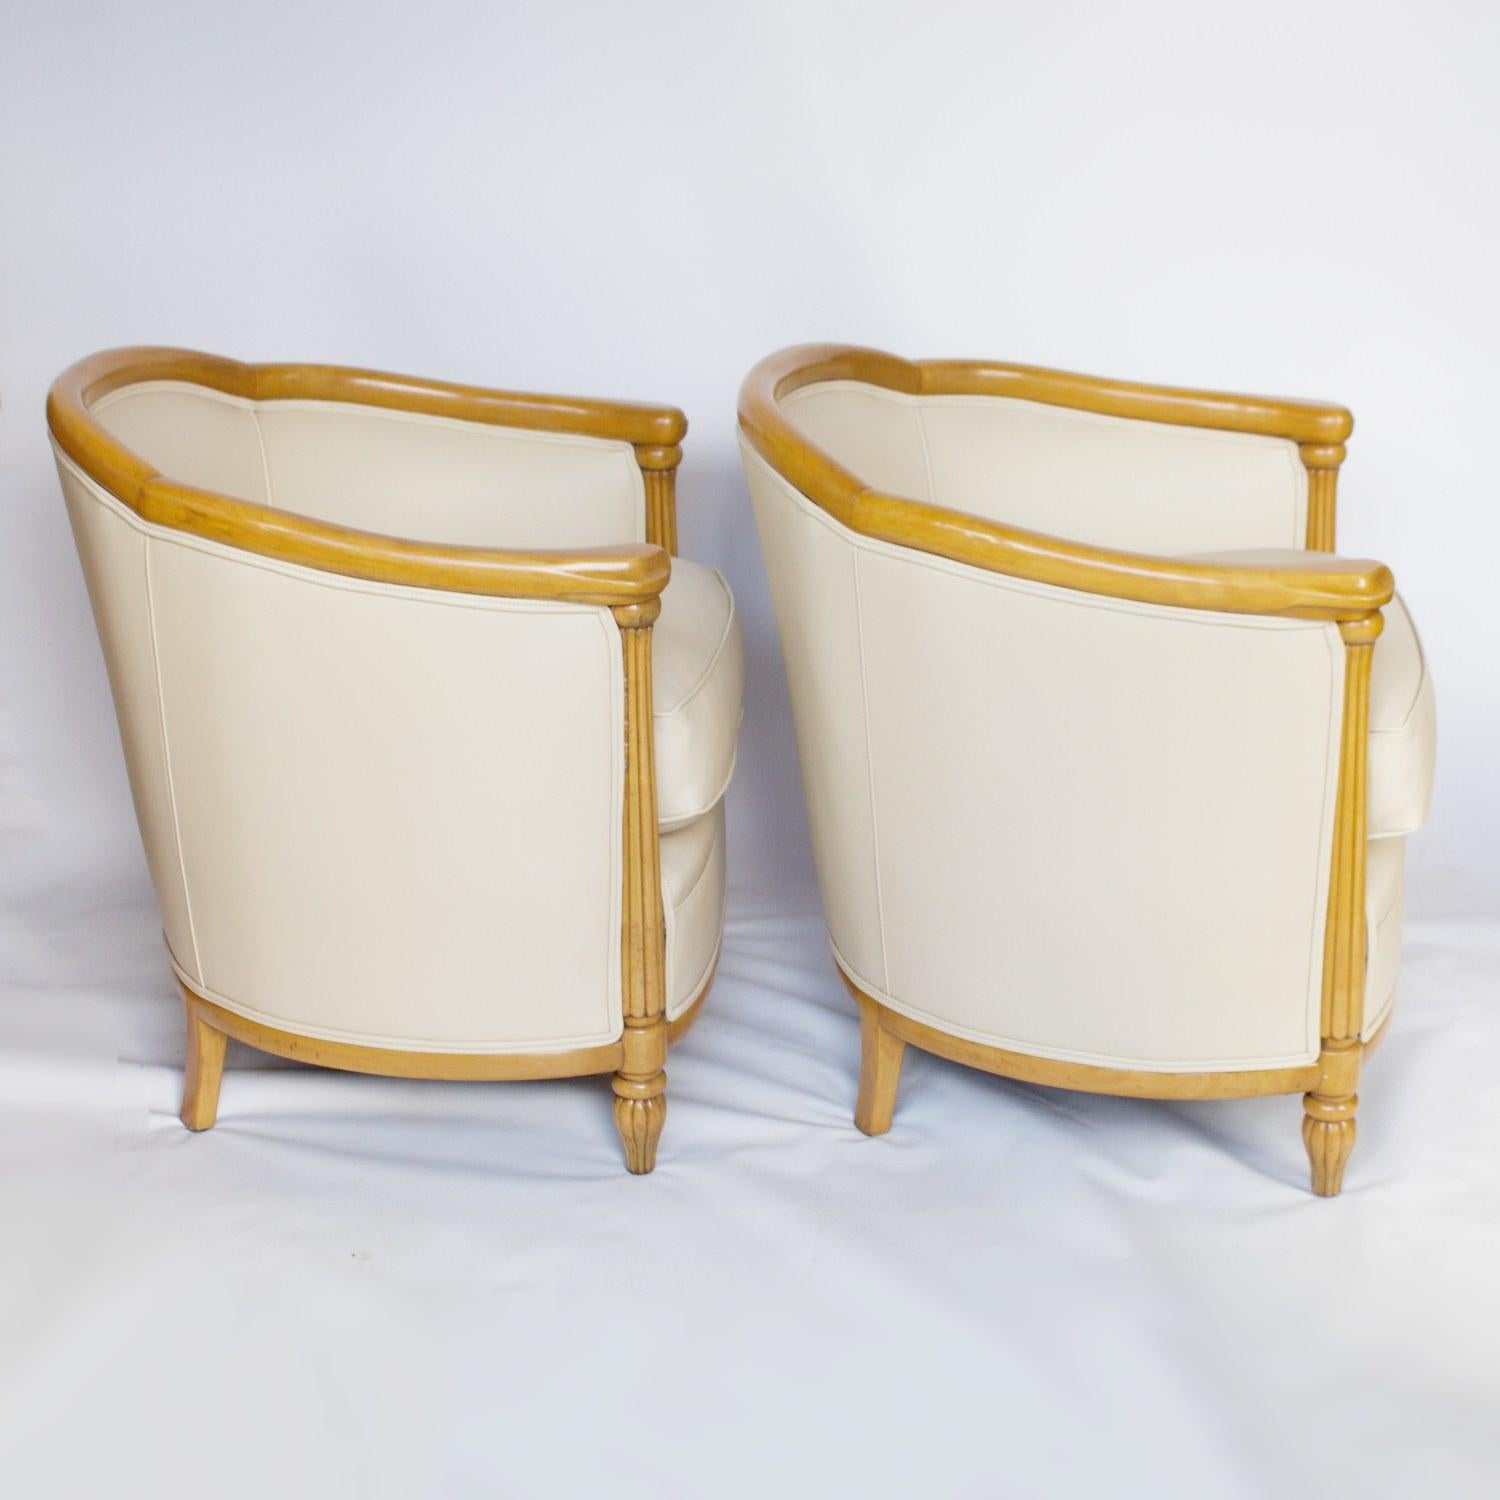 Leather Pair of Art Deco Tub Chairs, English, circa 1930